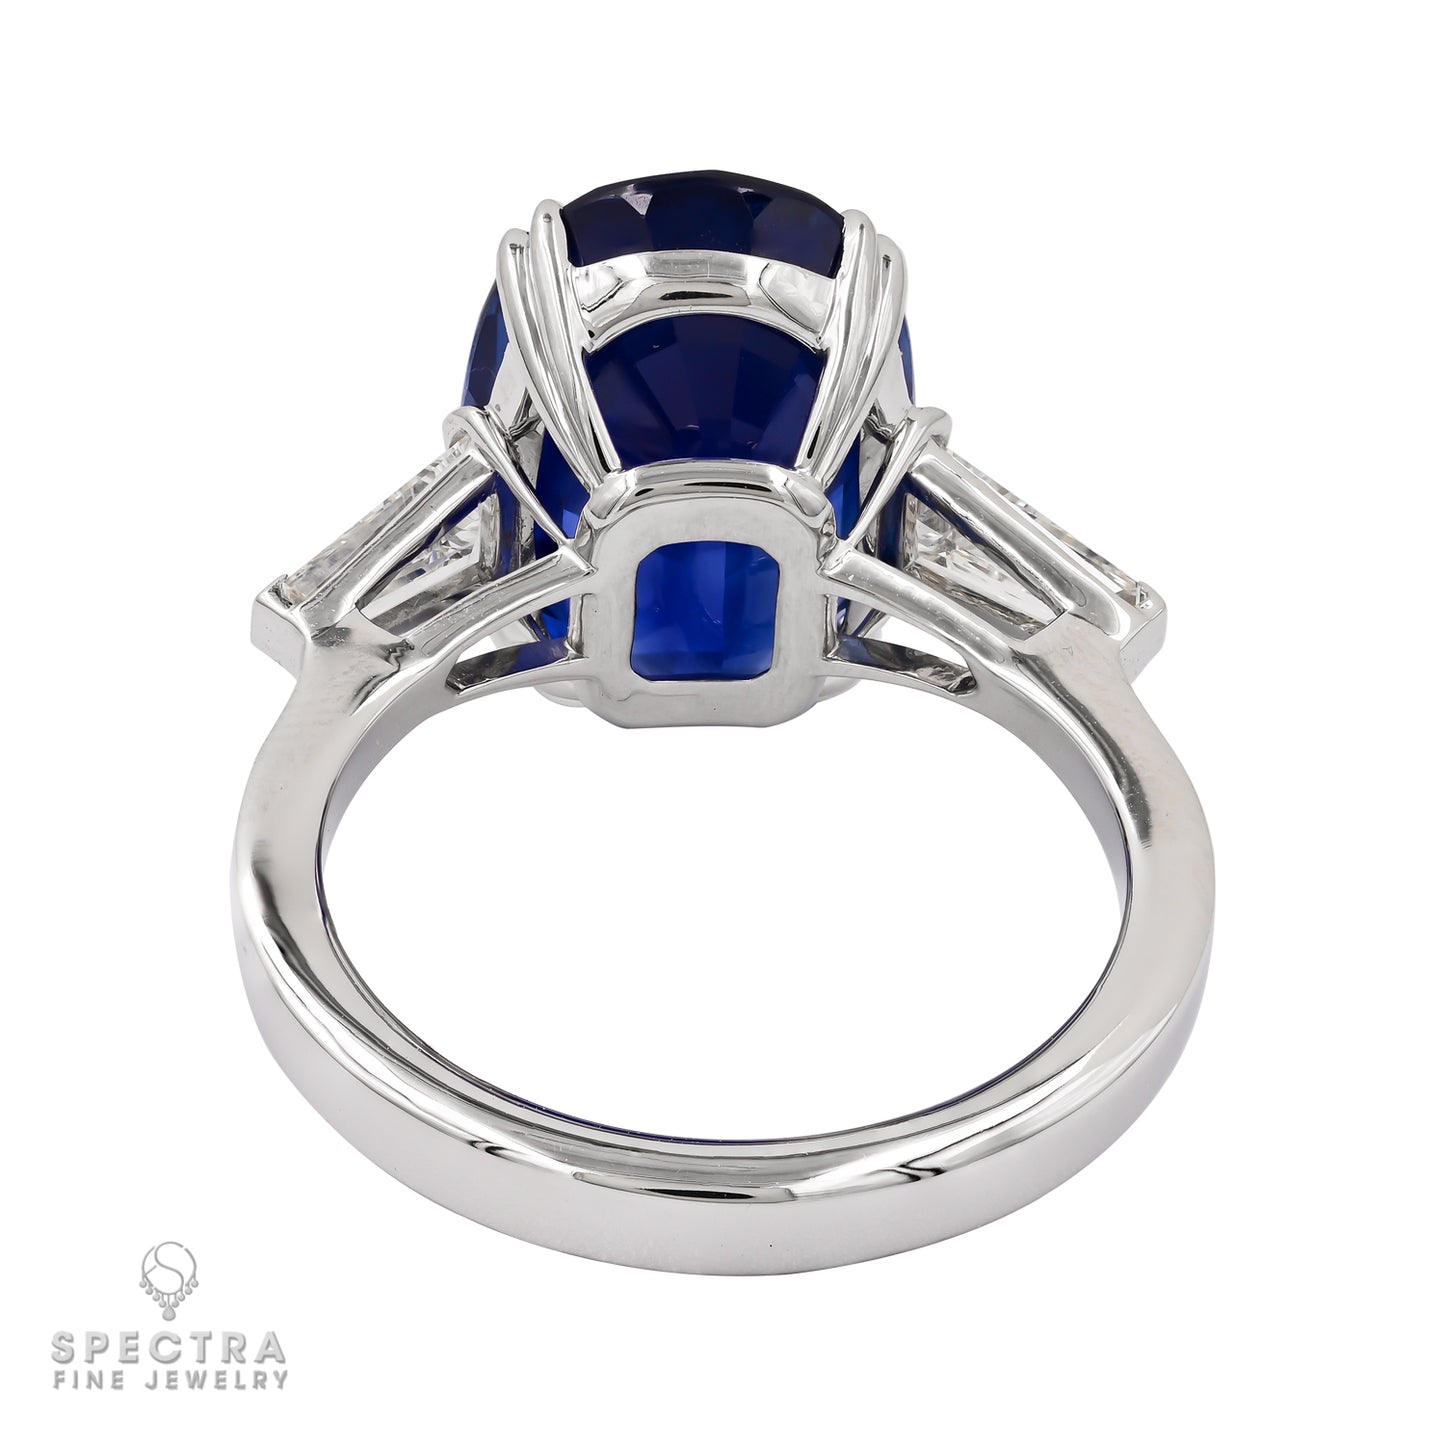 Spectra Fine Jewelry 9.57ct Oval Ceylon Sapphire Ring